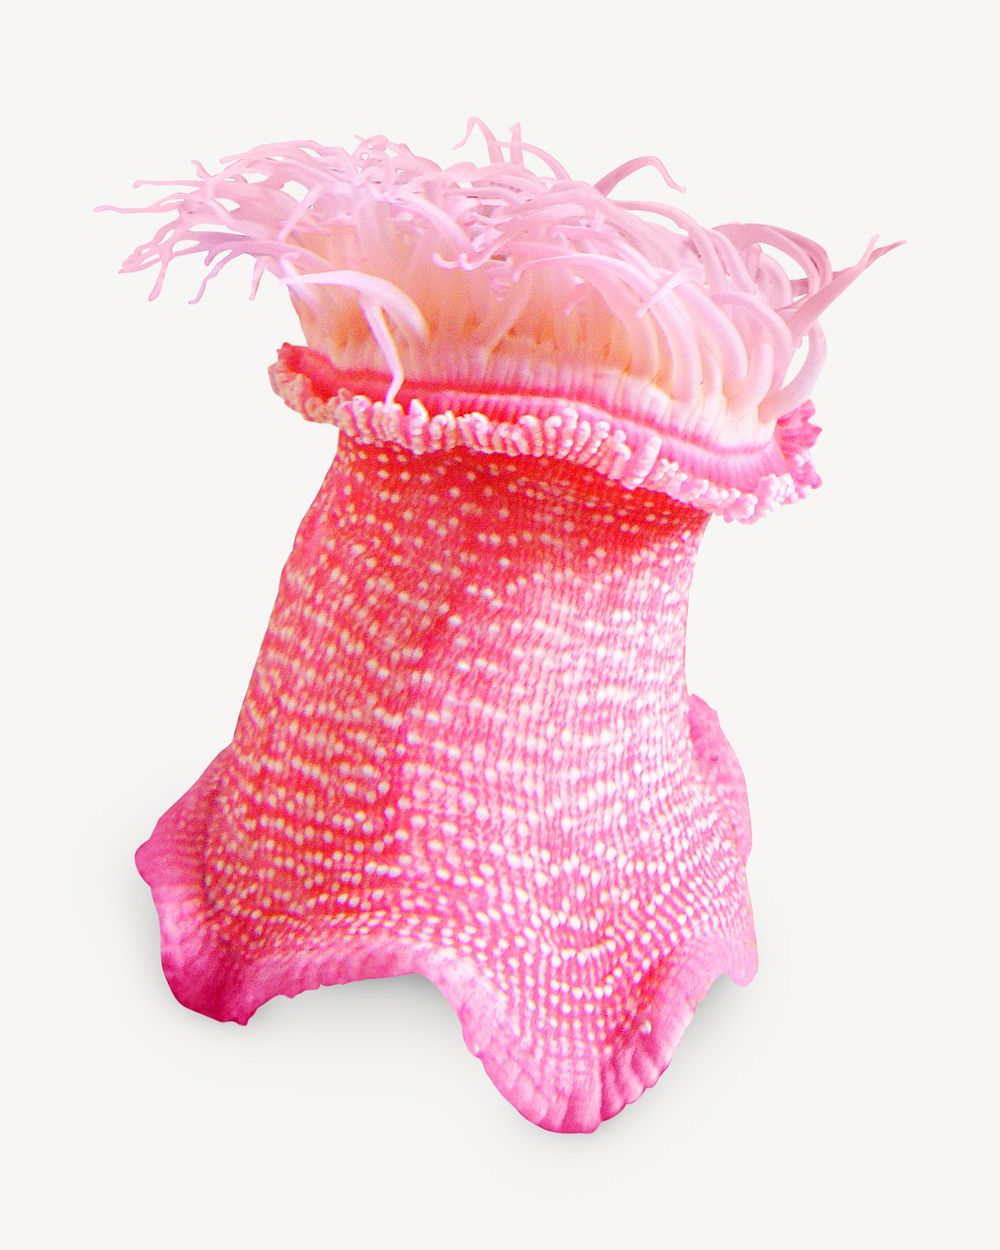 Sea anemone isolated design 